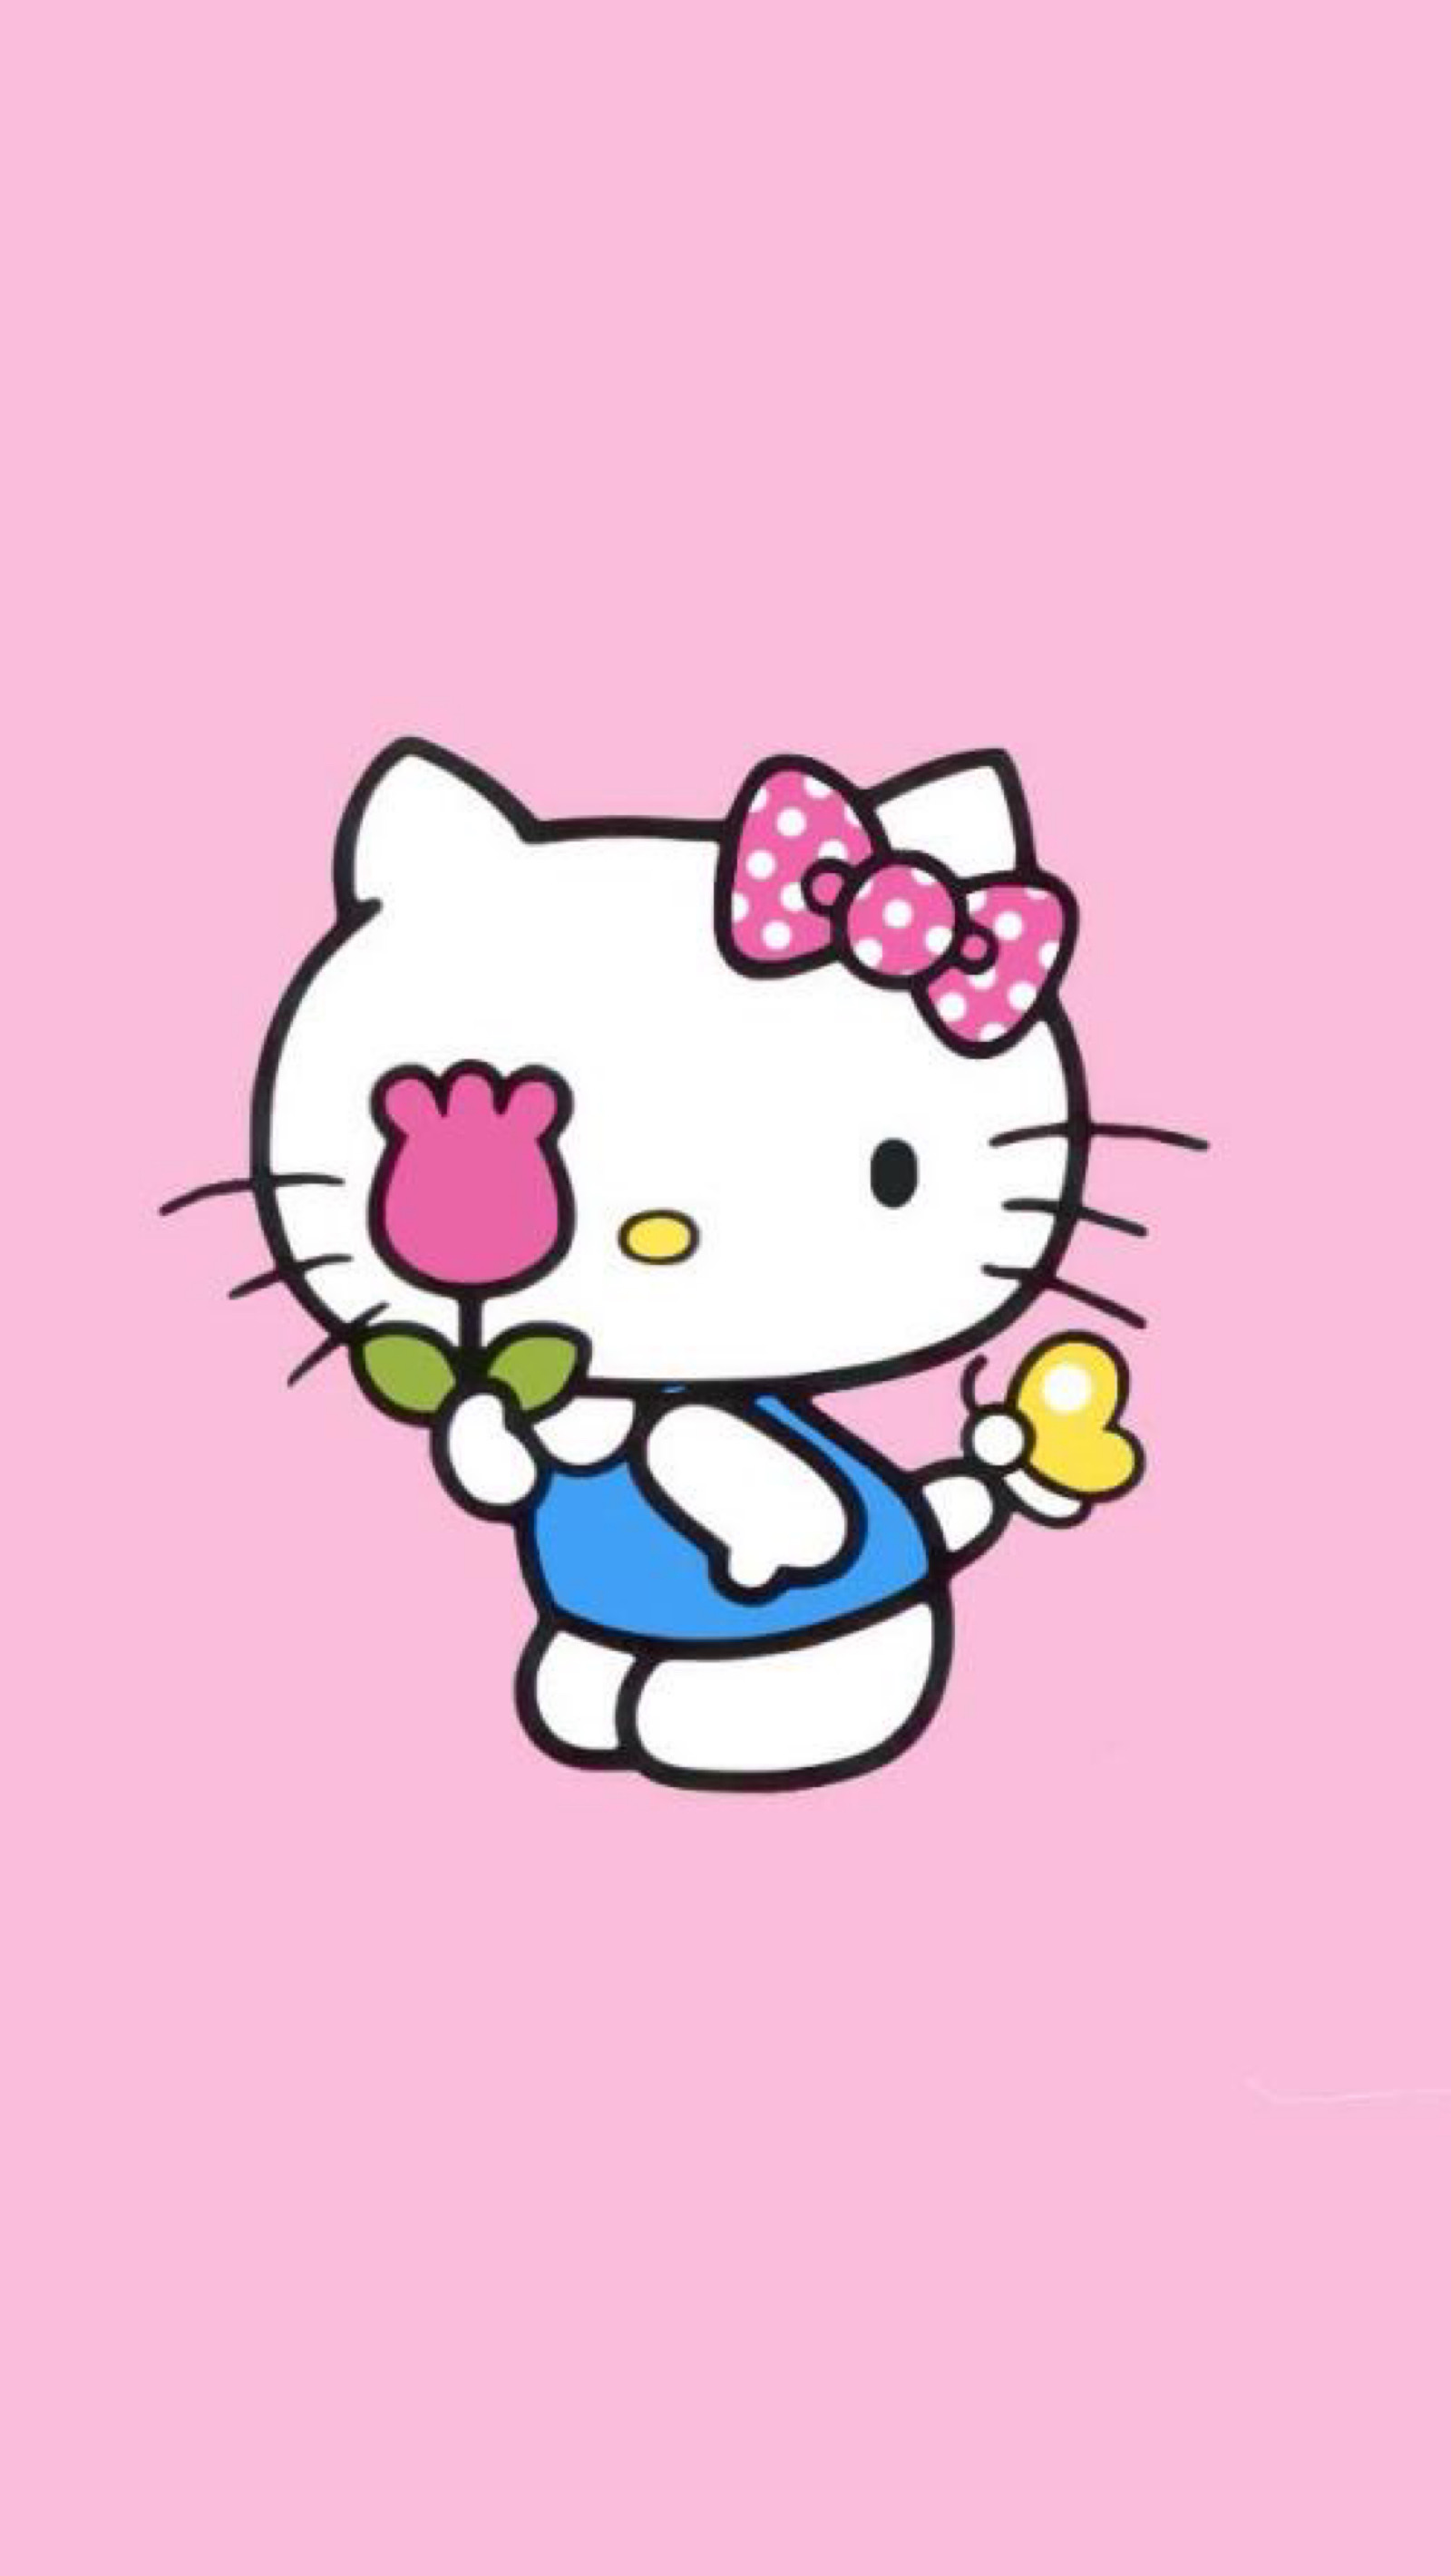 Hello Kitty可爱背景图片-高清壁纸-屈阿零可爱屋